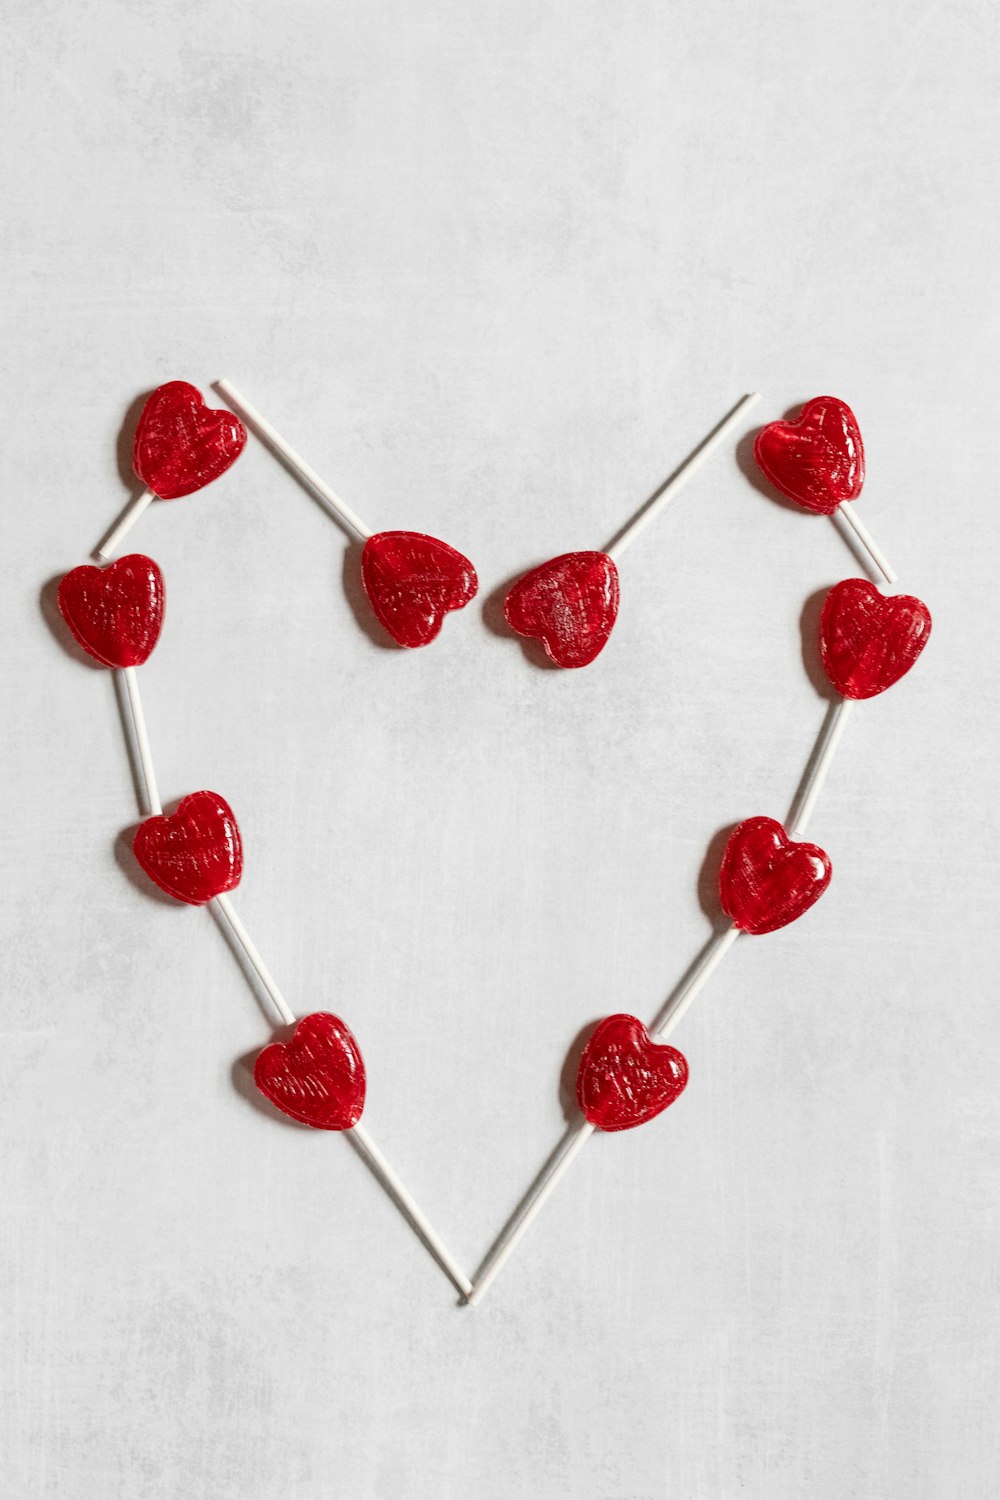 a heart shaped lollipop on a stick